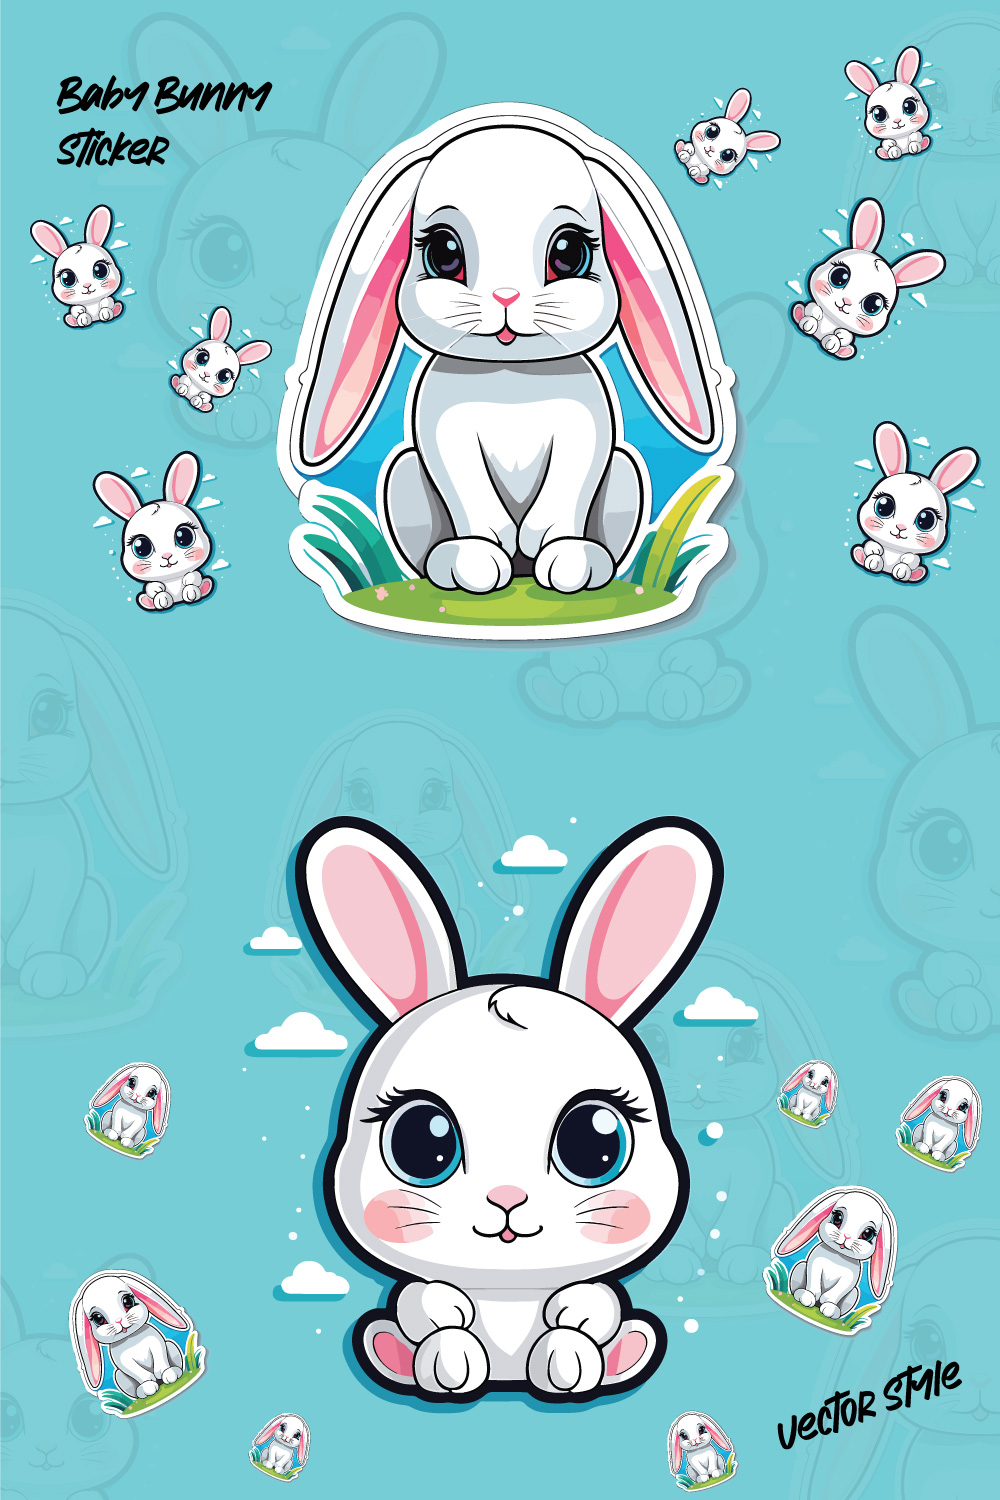 Baby Bunny Sticker & T shirt Design Vector Format Illustration pinterest preview image.